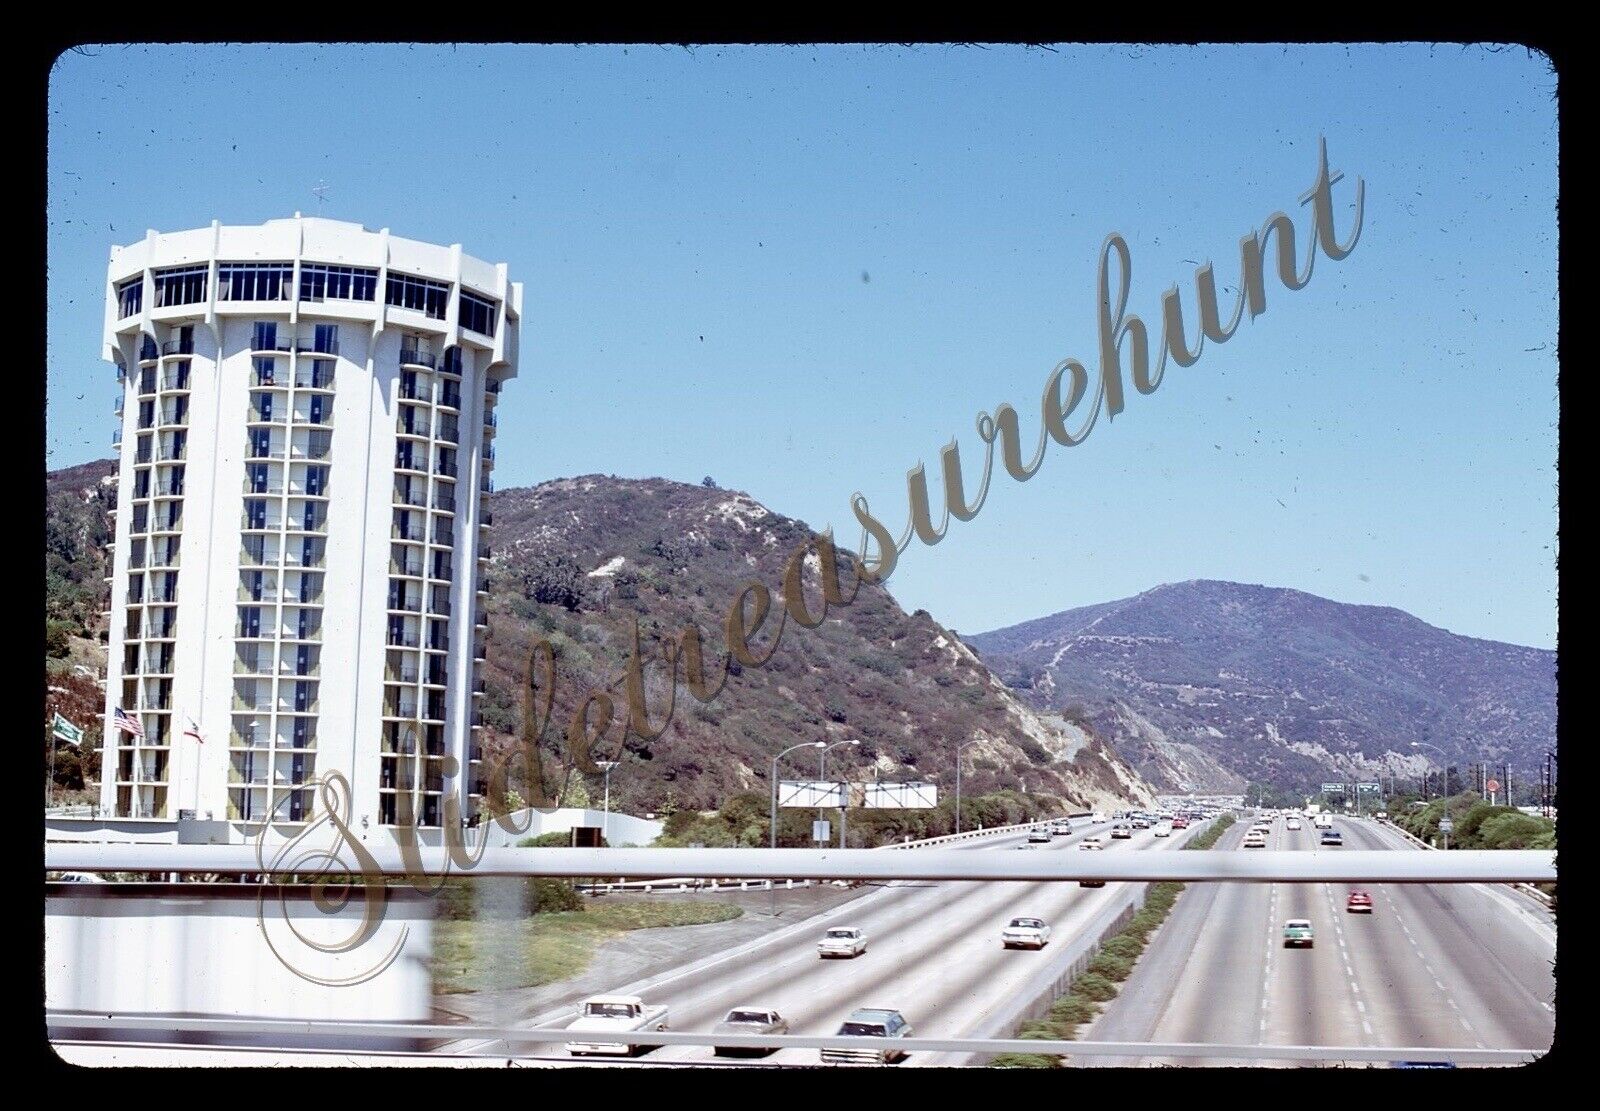 Hotel Angeleno Los Angeles Highway 1970s 35mm Slide Kodachrome Cars